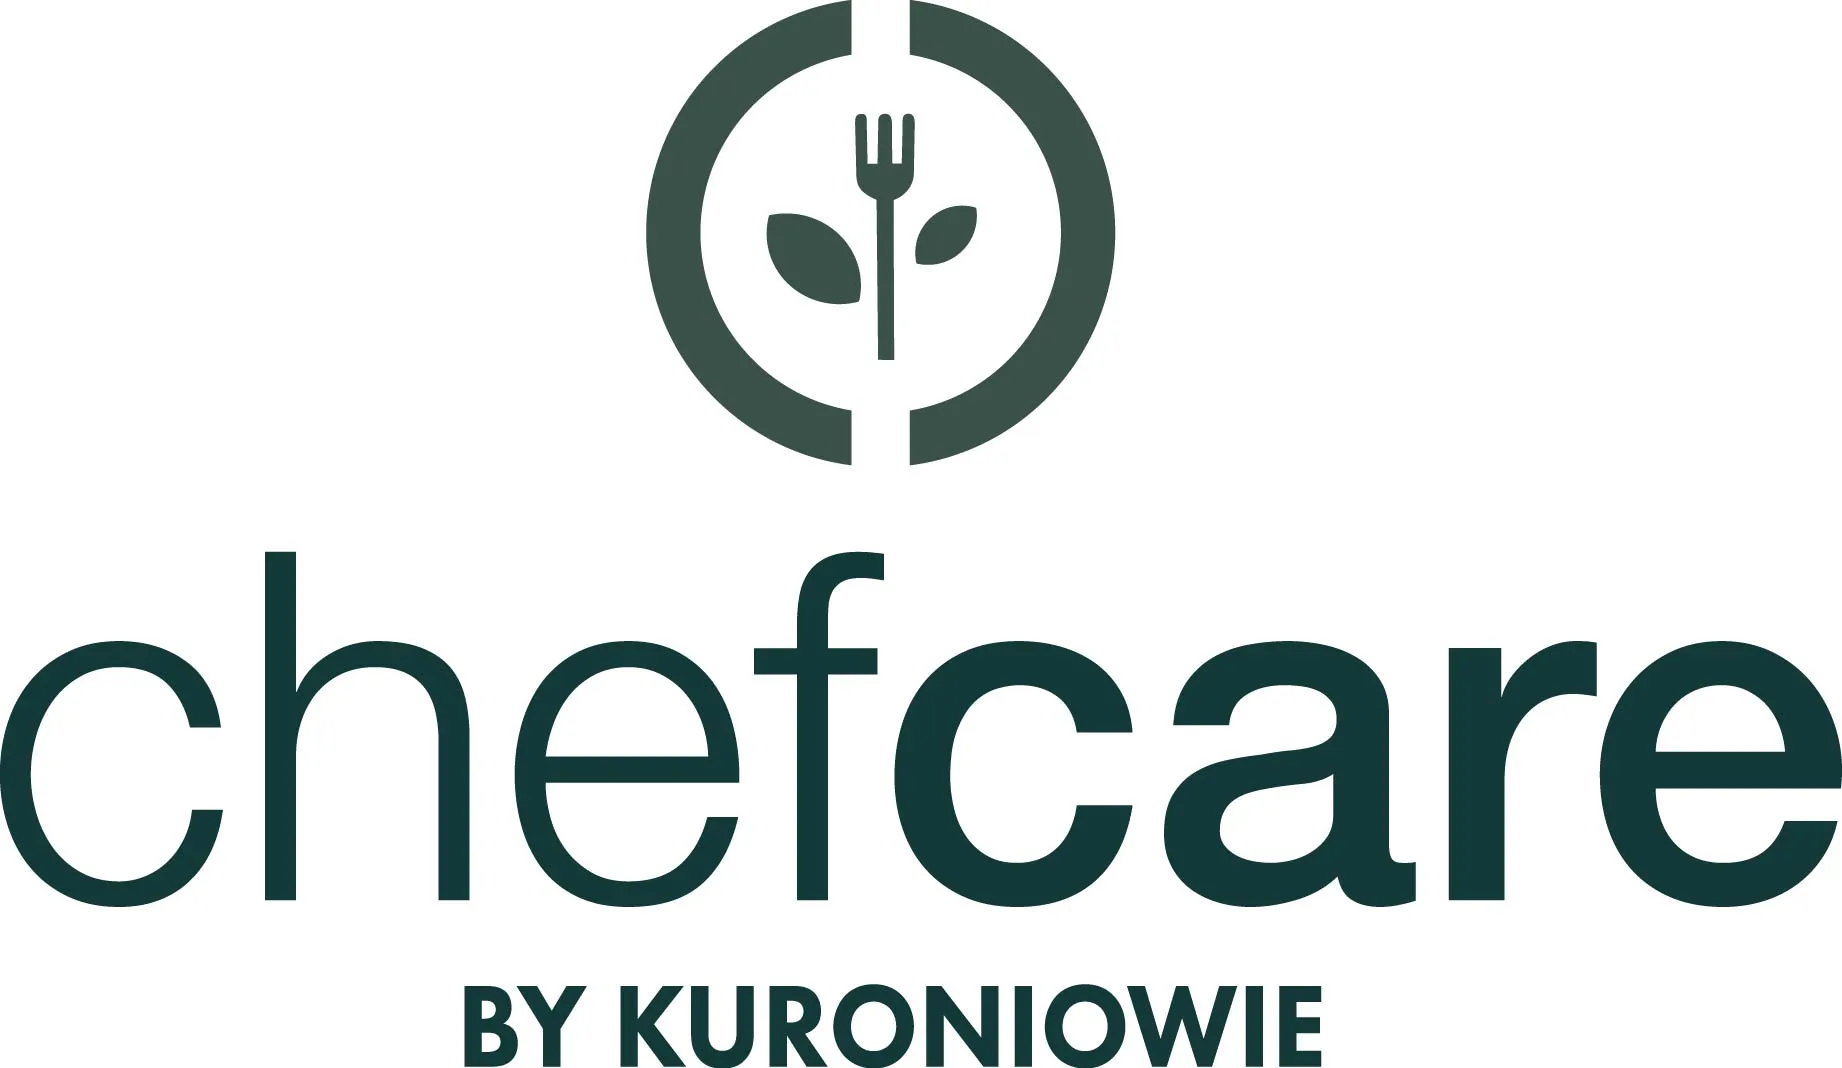 Chefcare by Kuroniowie - logo